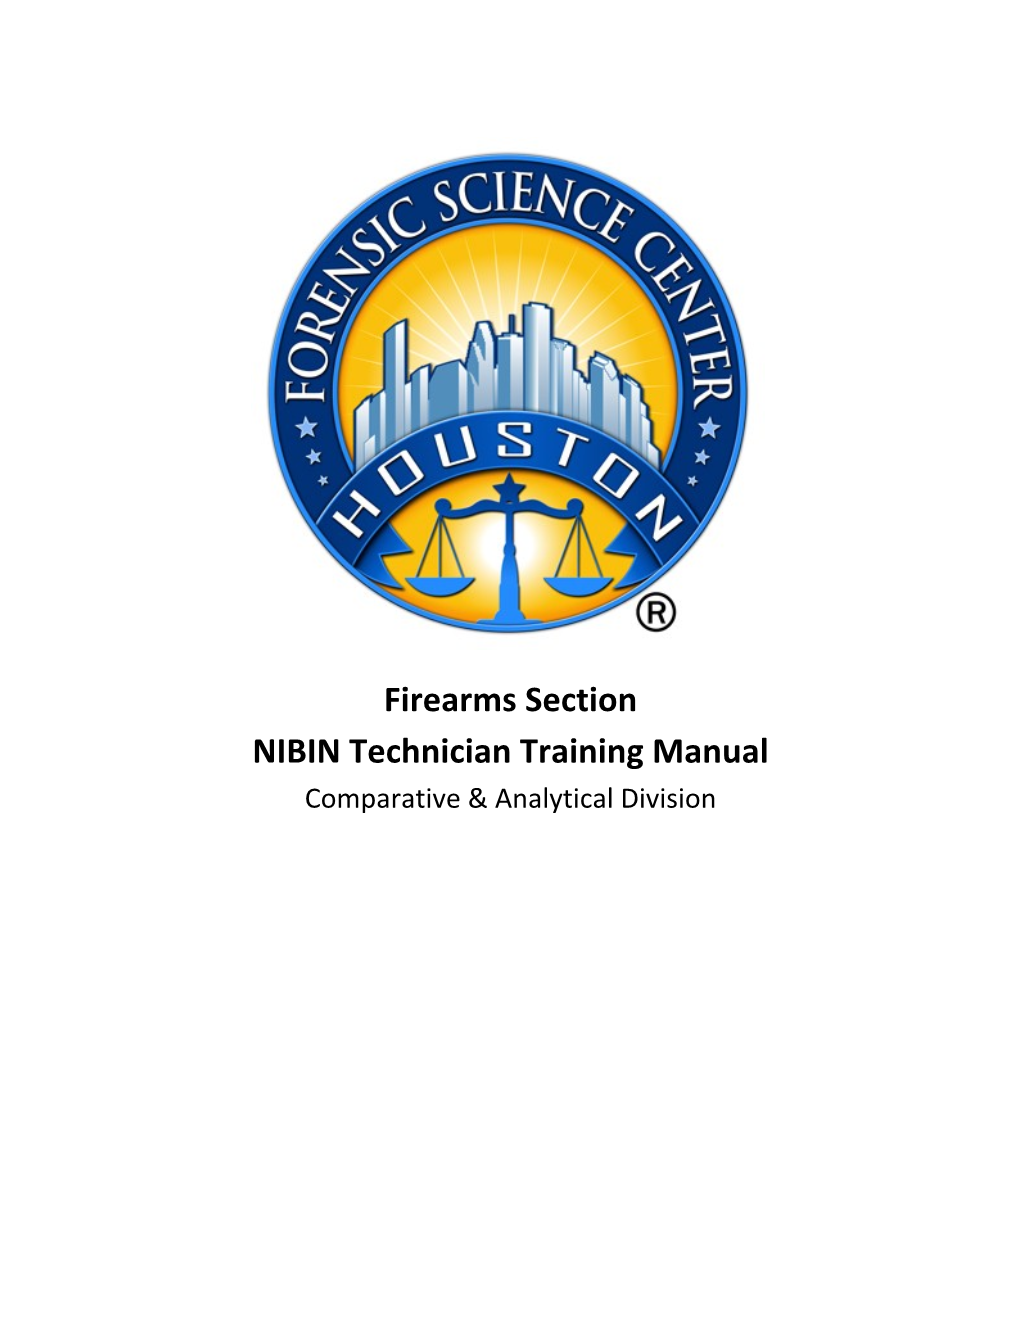 NIBIN Technician Training Manual Effective November 3, 2020